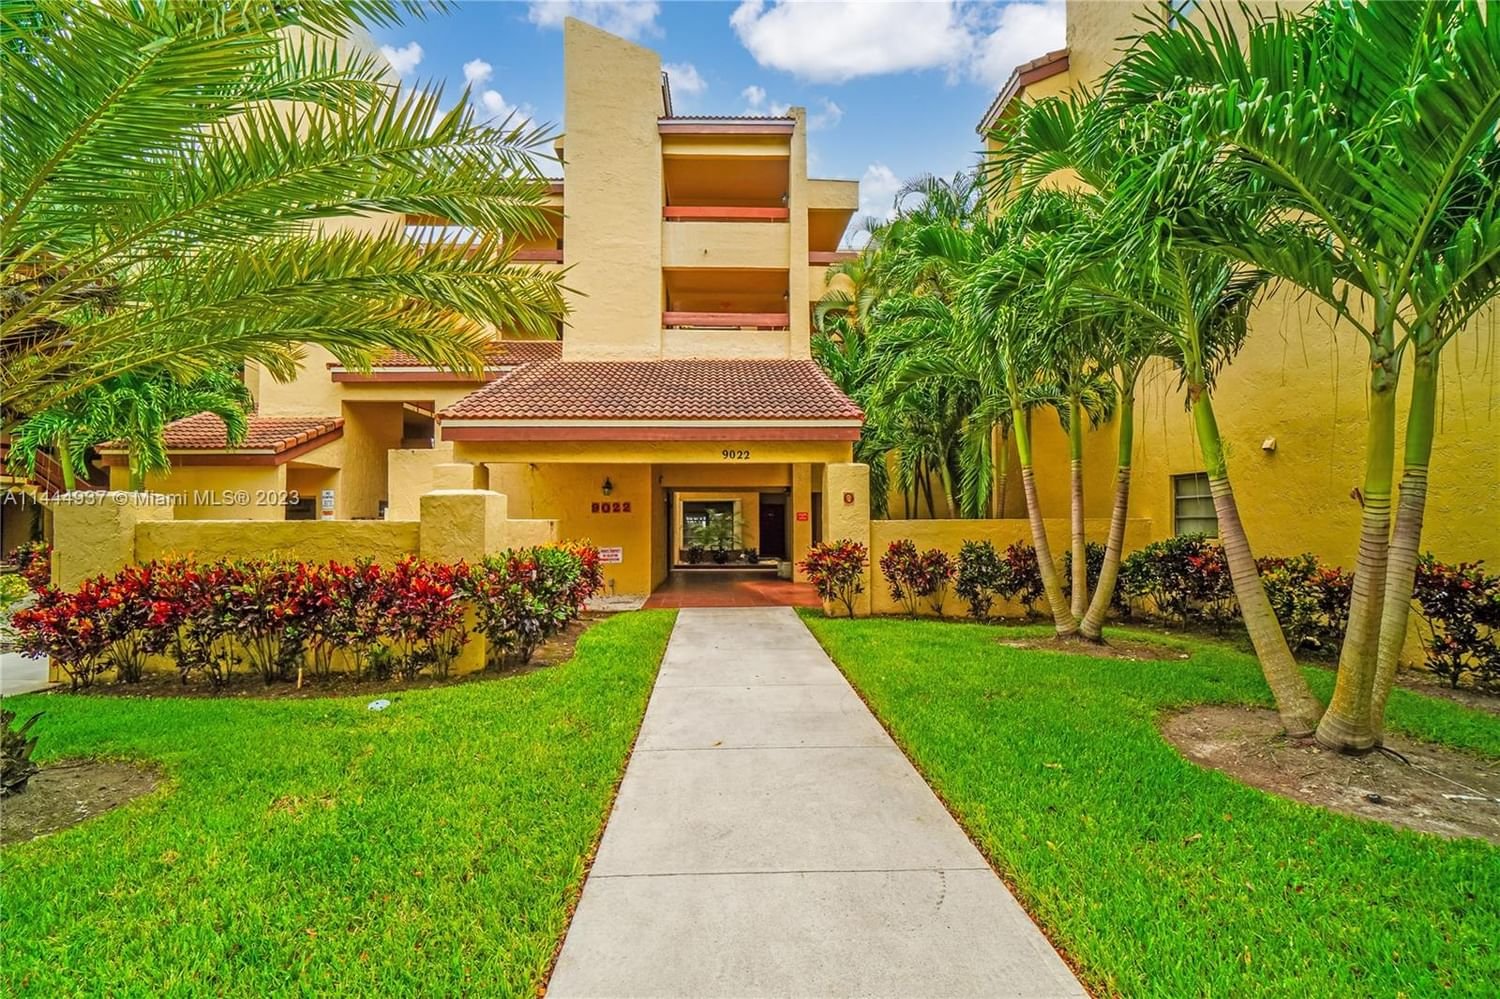 Real estate property located at 9022 123rd Ct O408, Miami-Dade County, Miami, FL